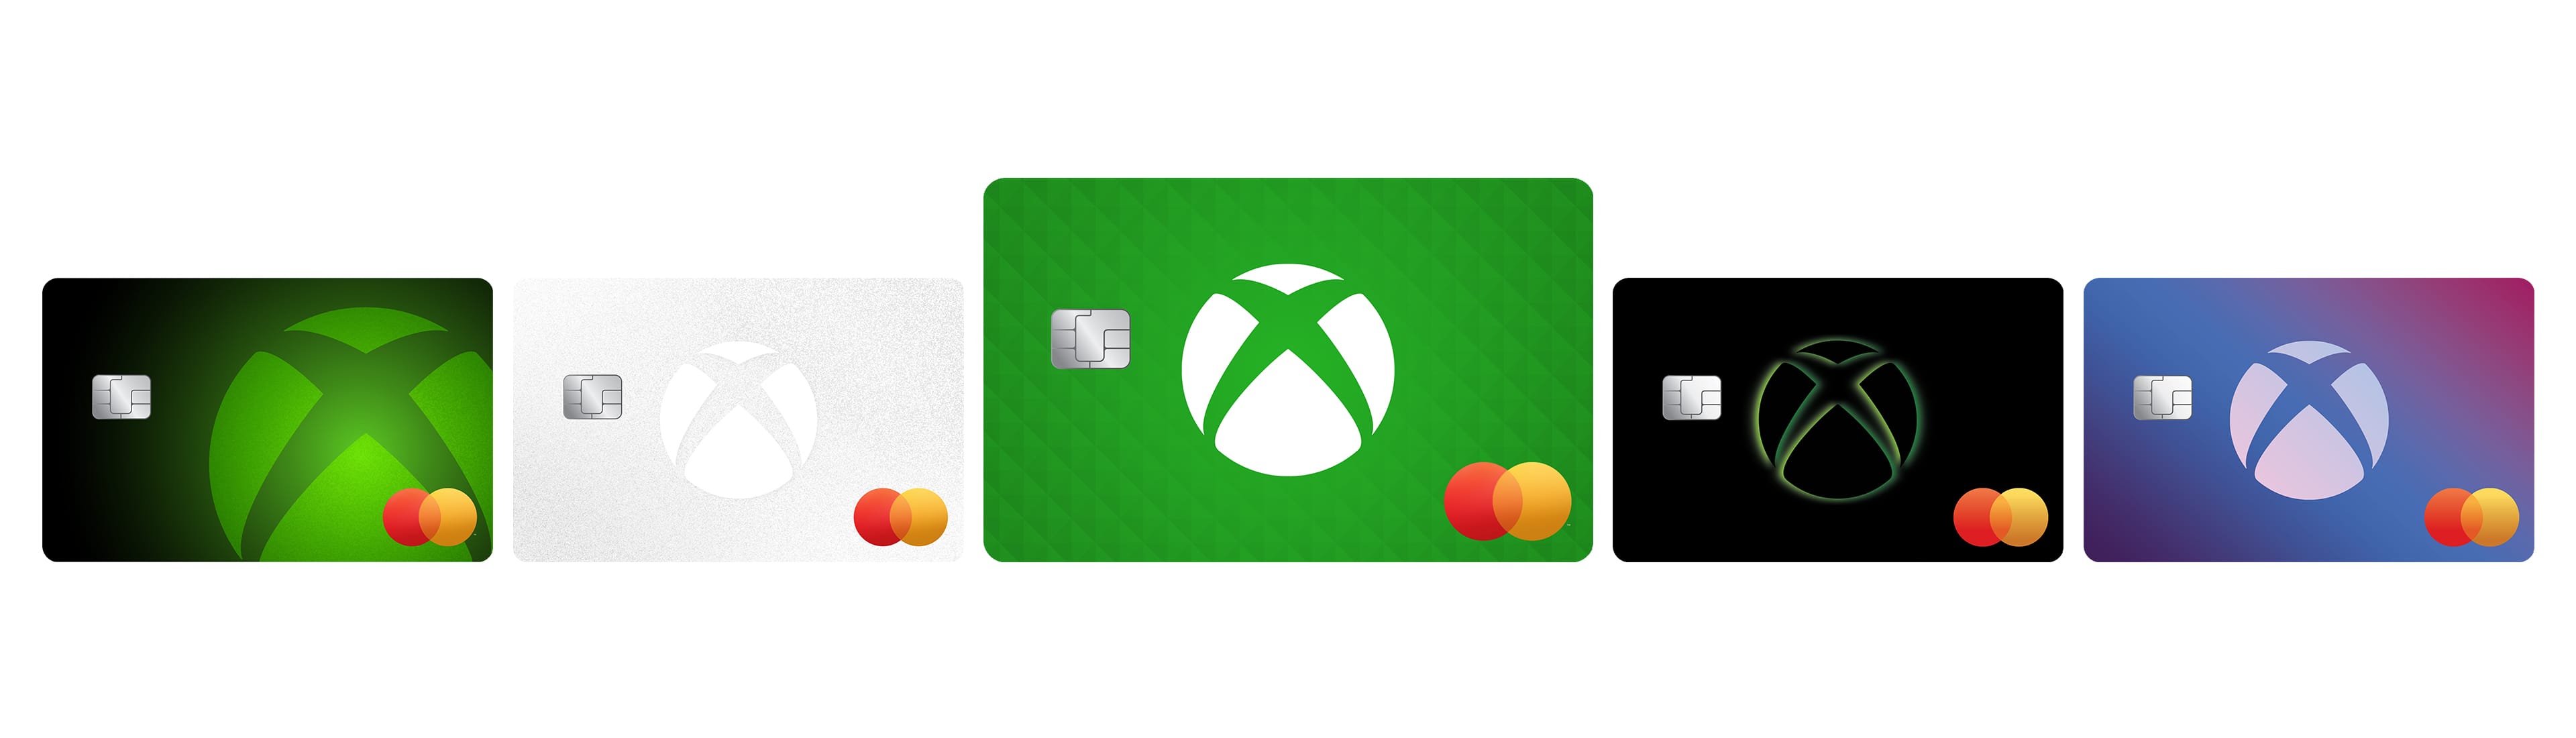 Xbox-Mastercard-5-Cards-2e57abb9491f4a0cdf8e.jpg